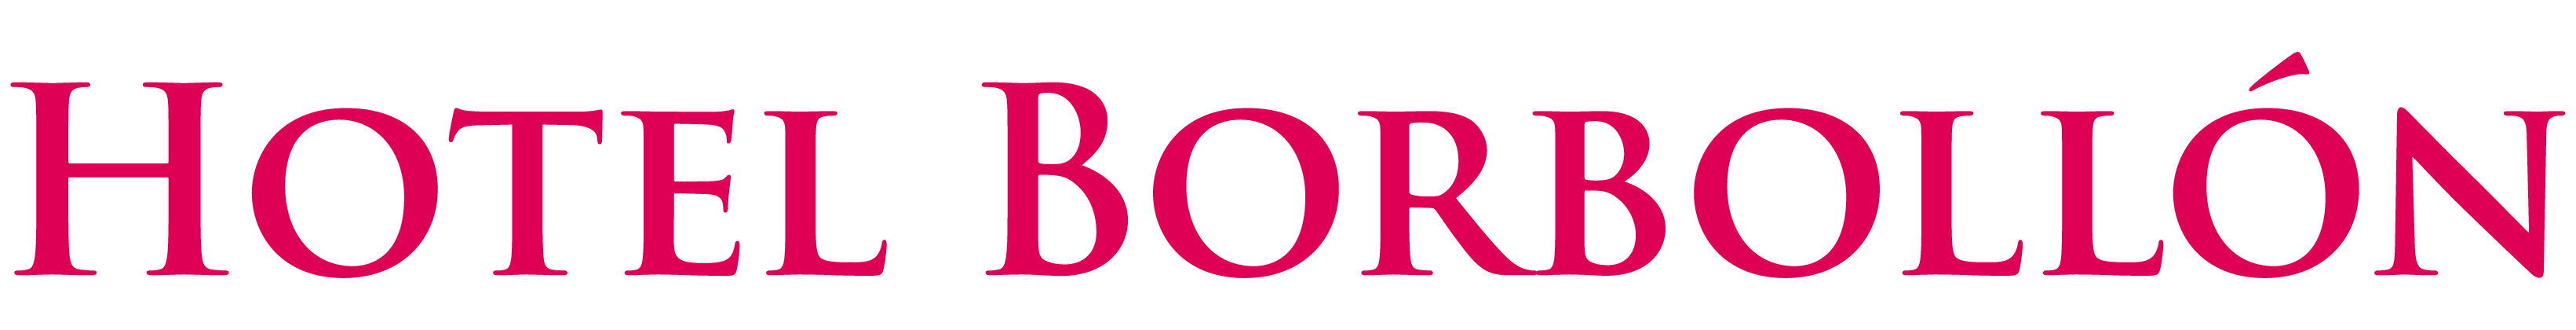 Hotel Borbollon logo